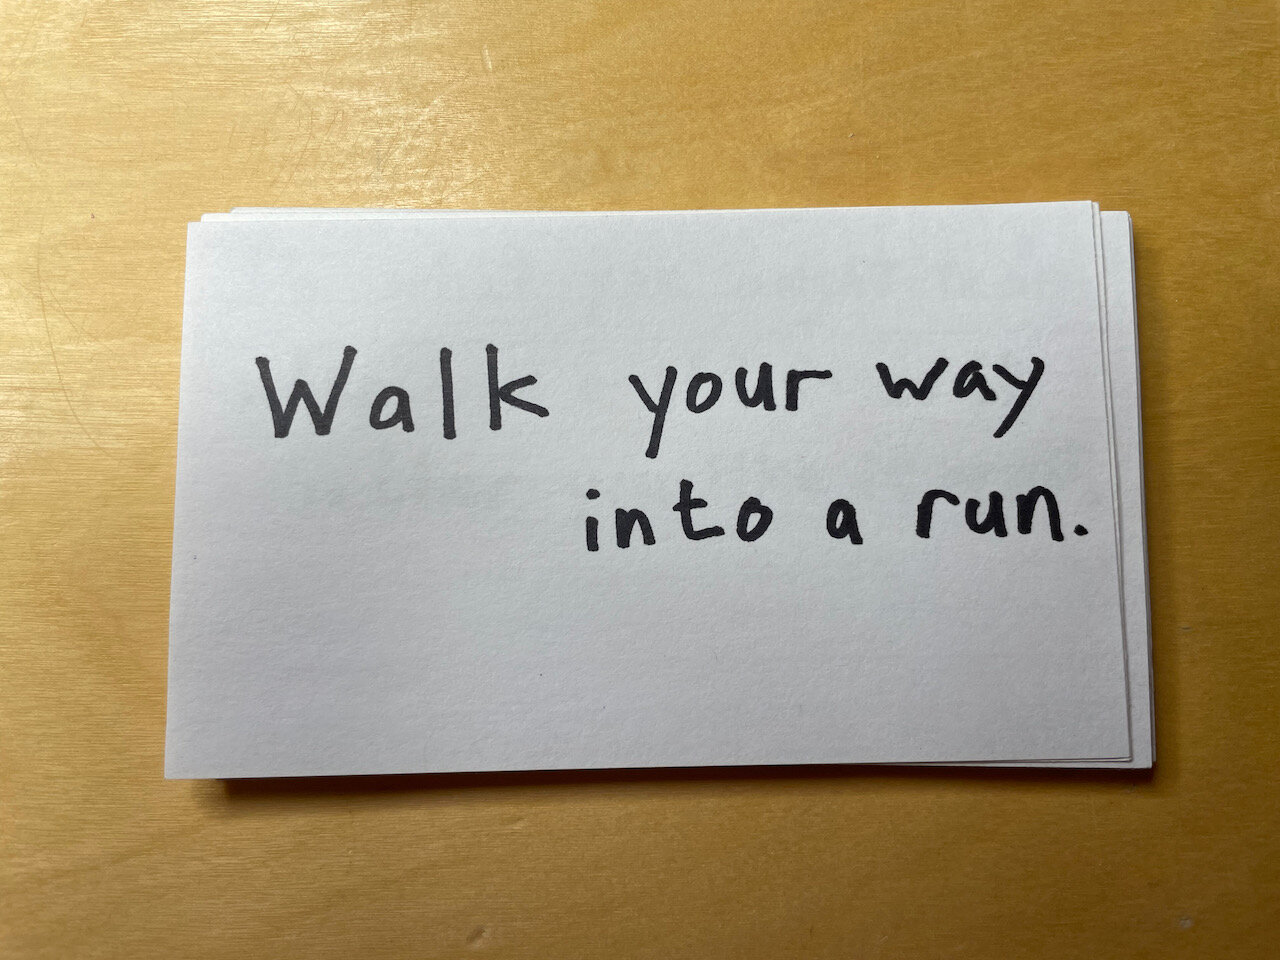 Walk your way into a run.